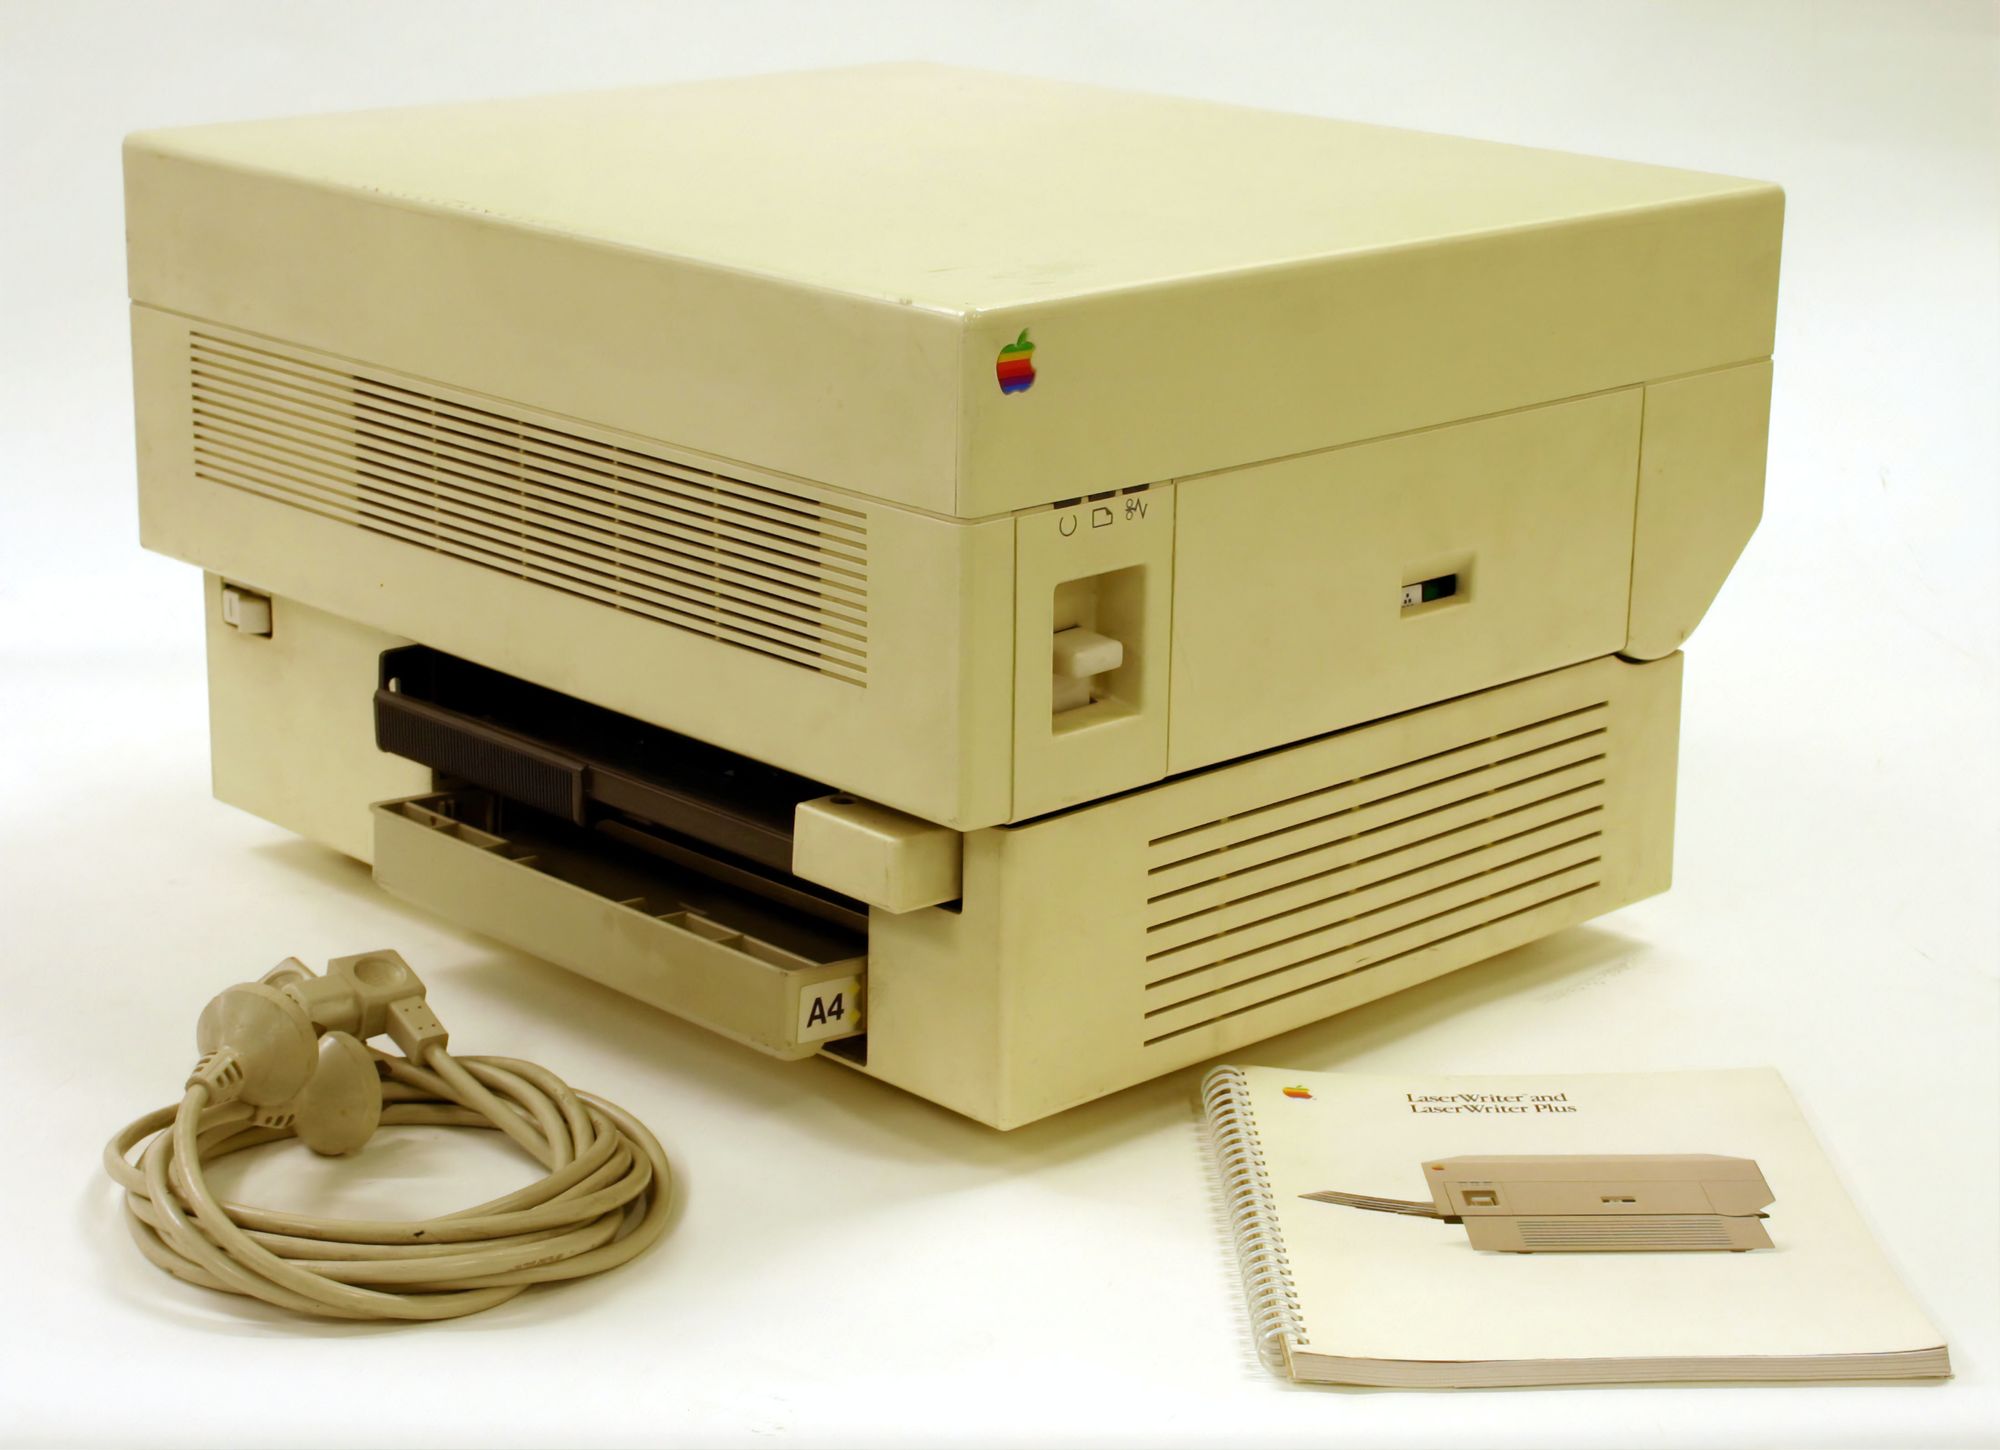 Old Apple Printer